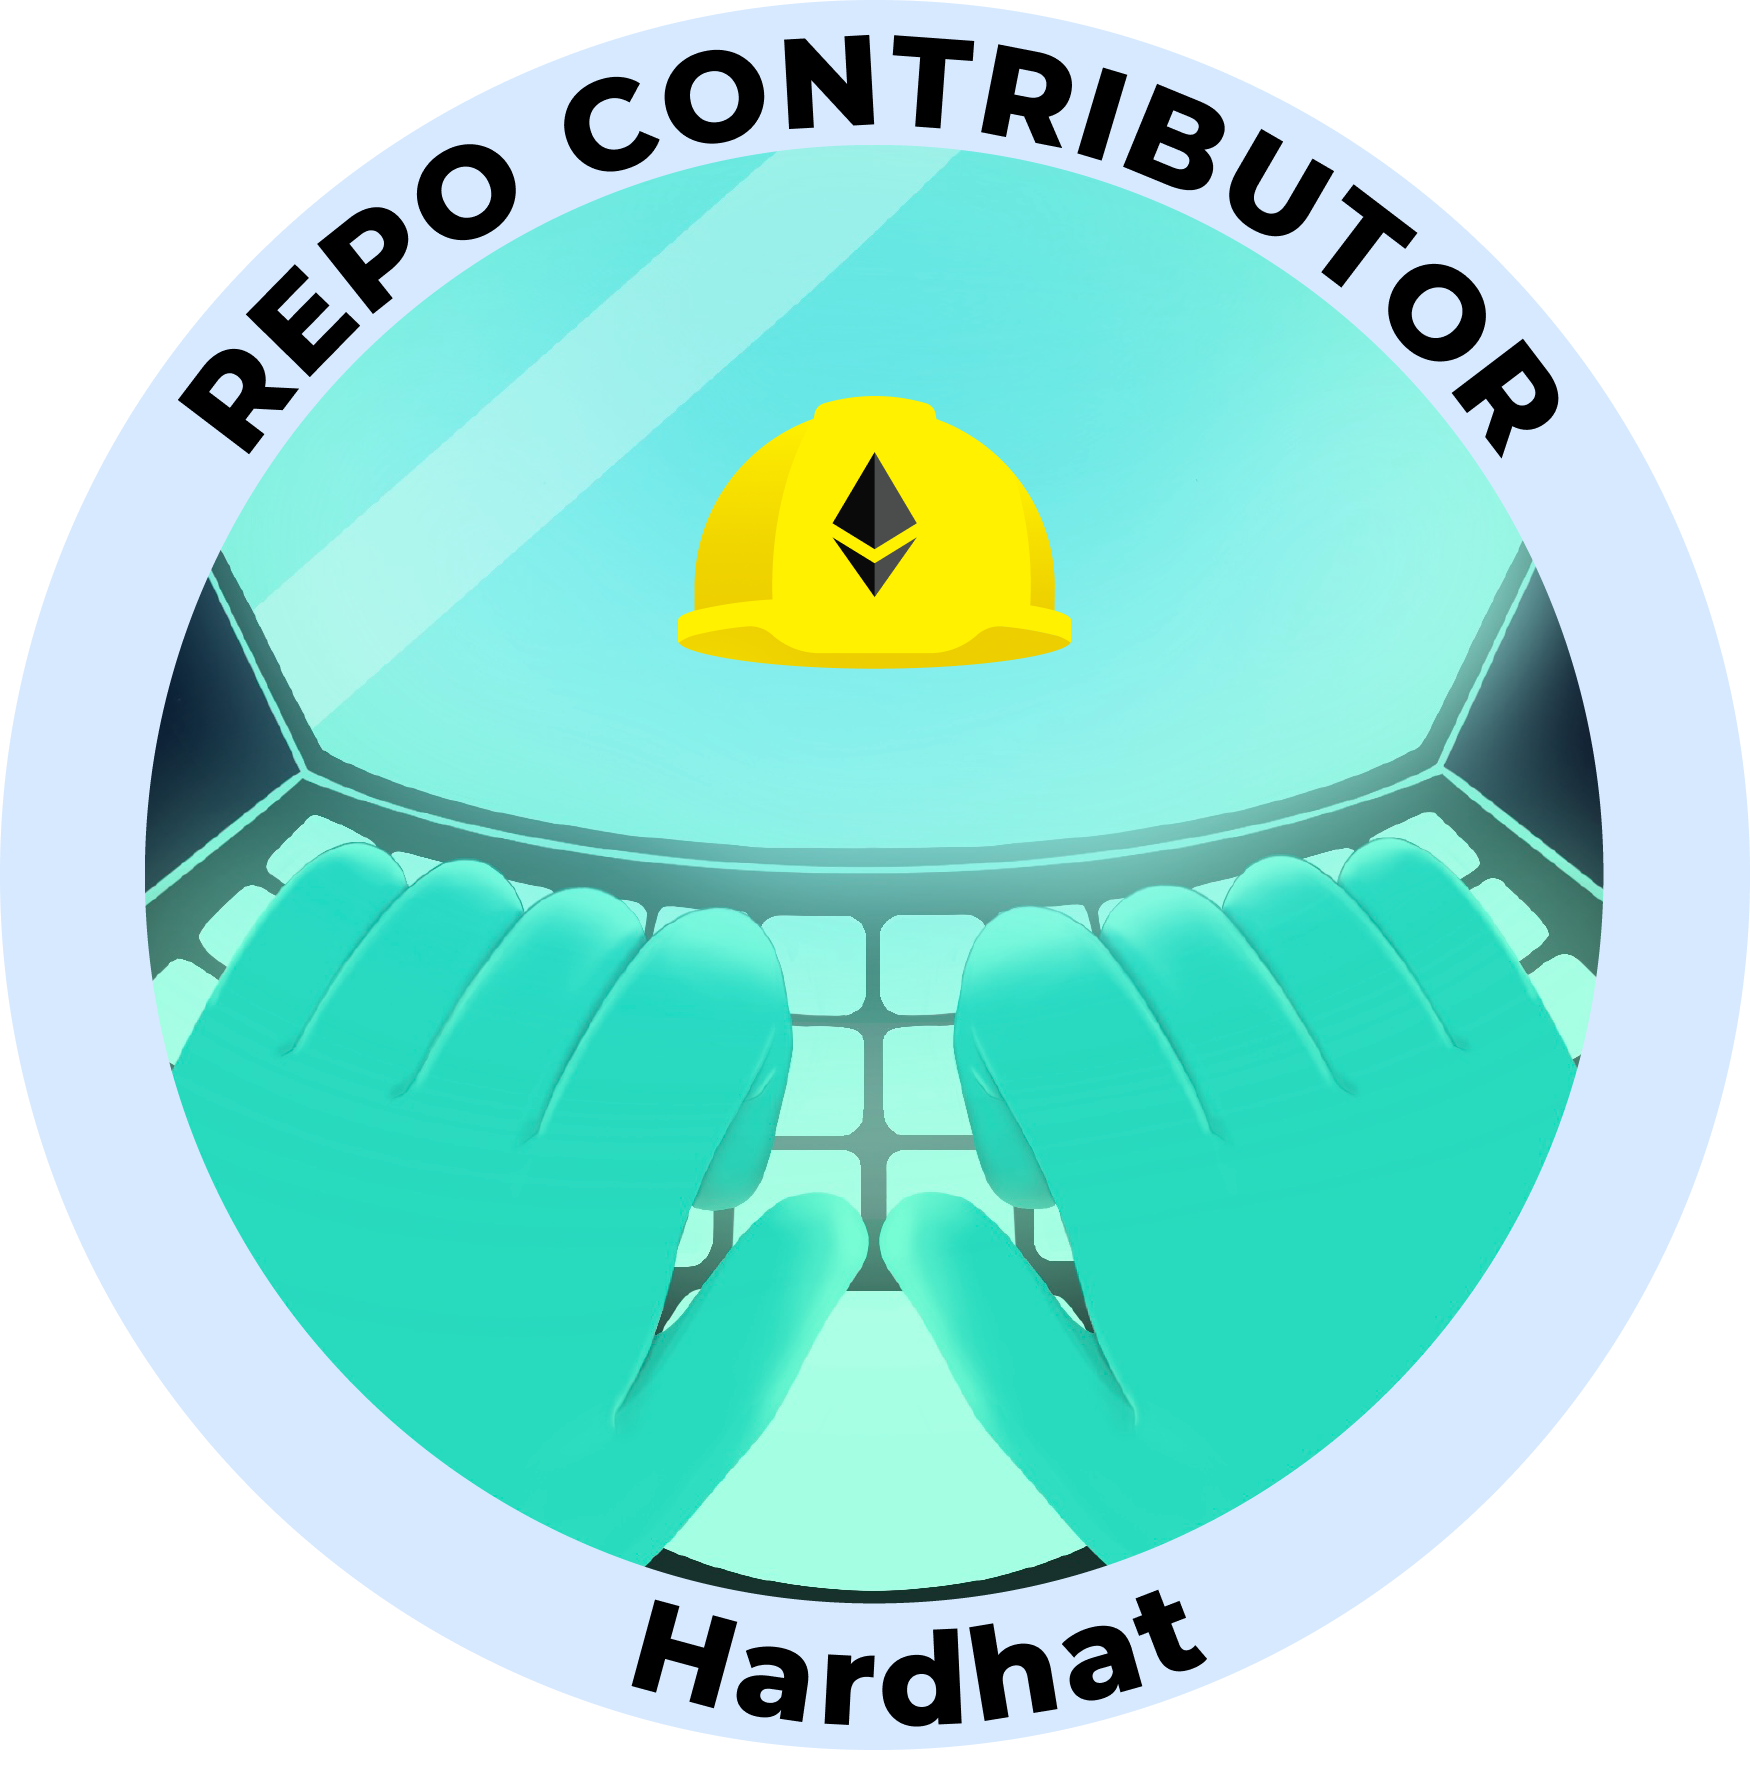 Web3 Badge | Project Contributor: Hardhat